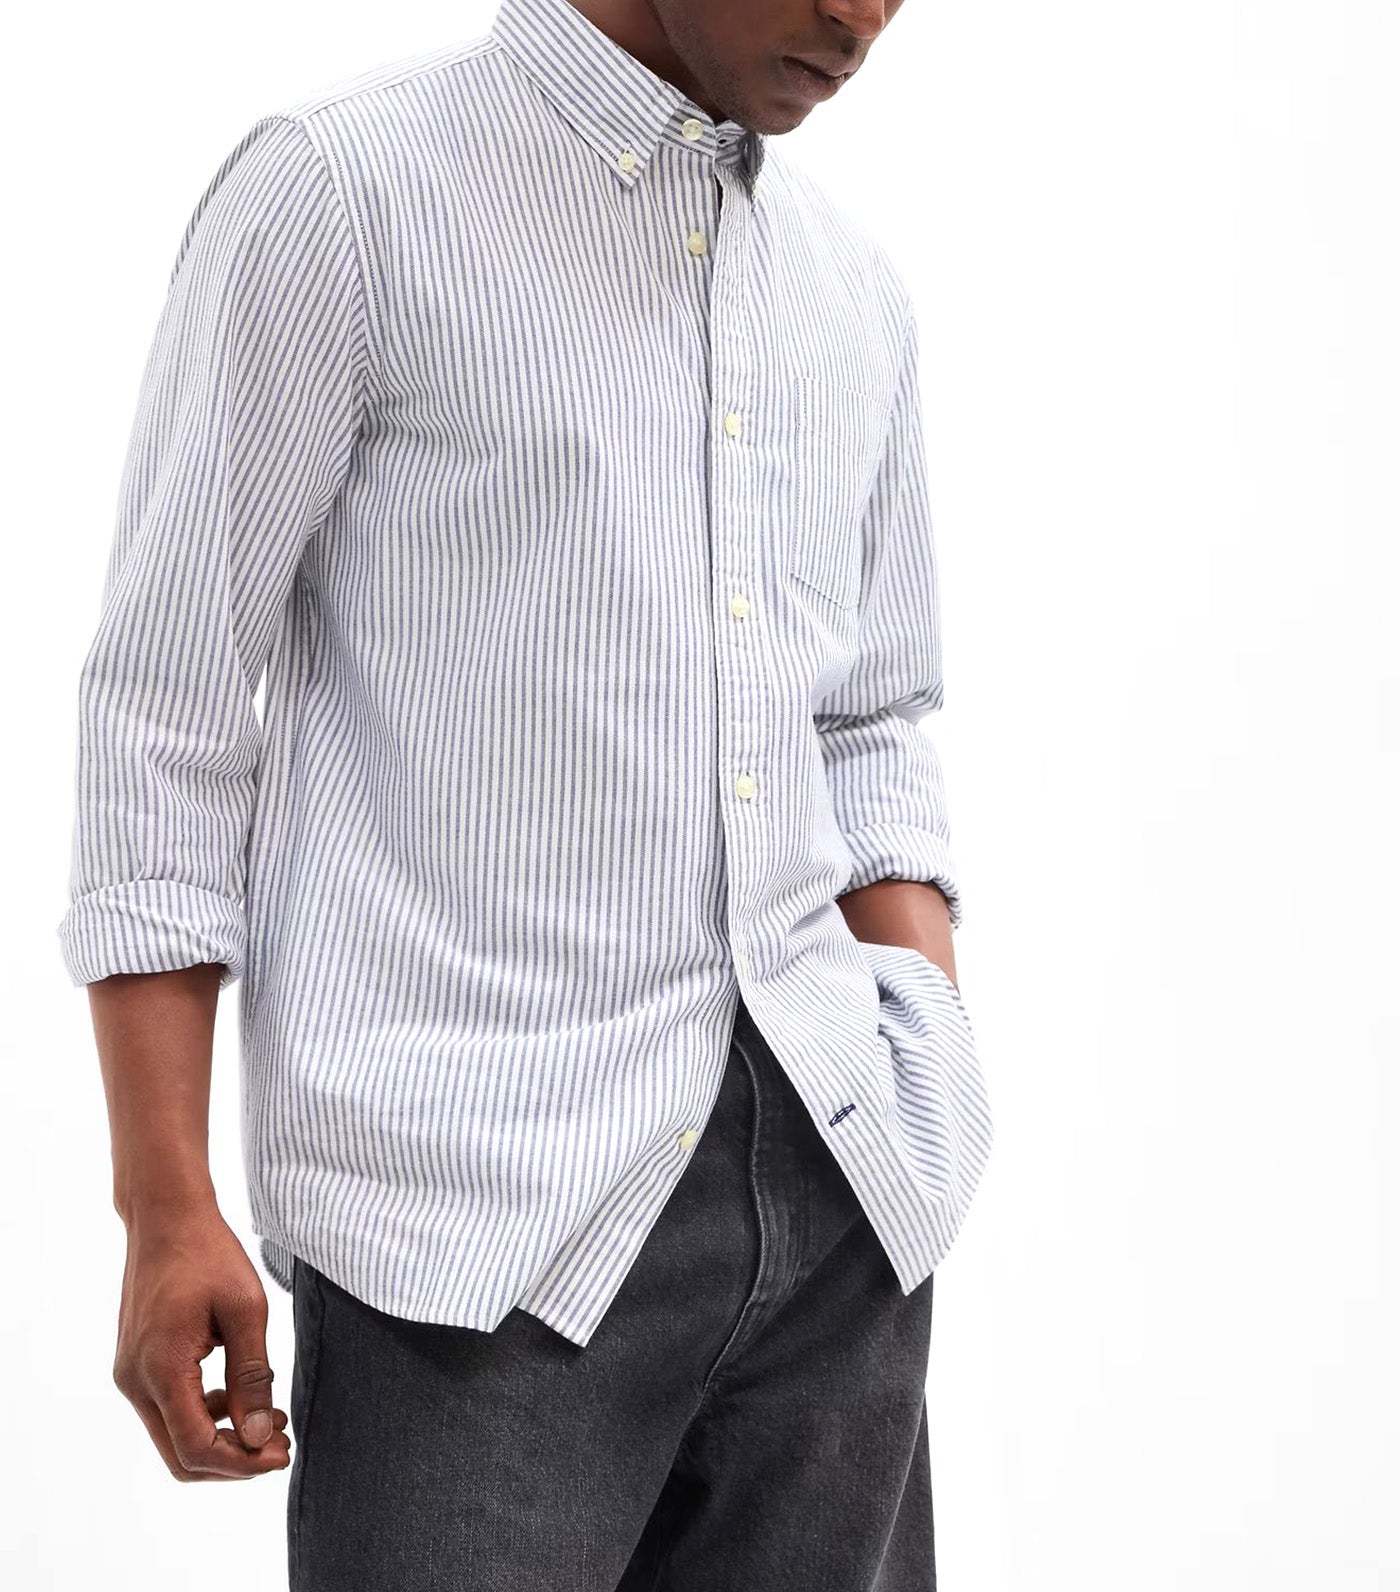 Oxford Shirt in Standard Fit White Navy Stripe